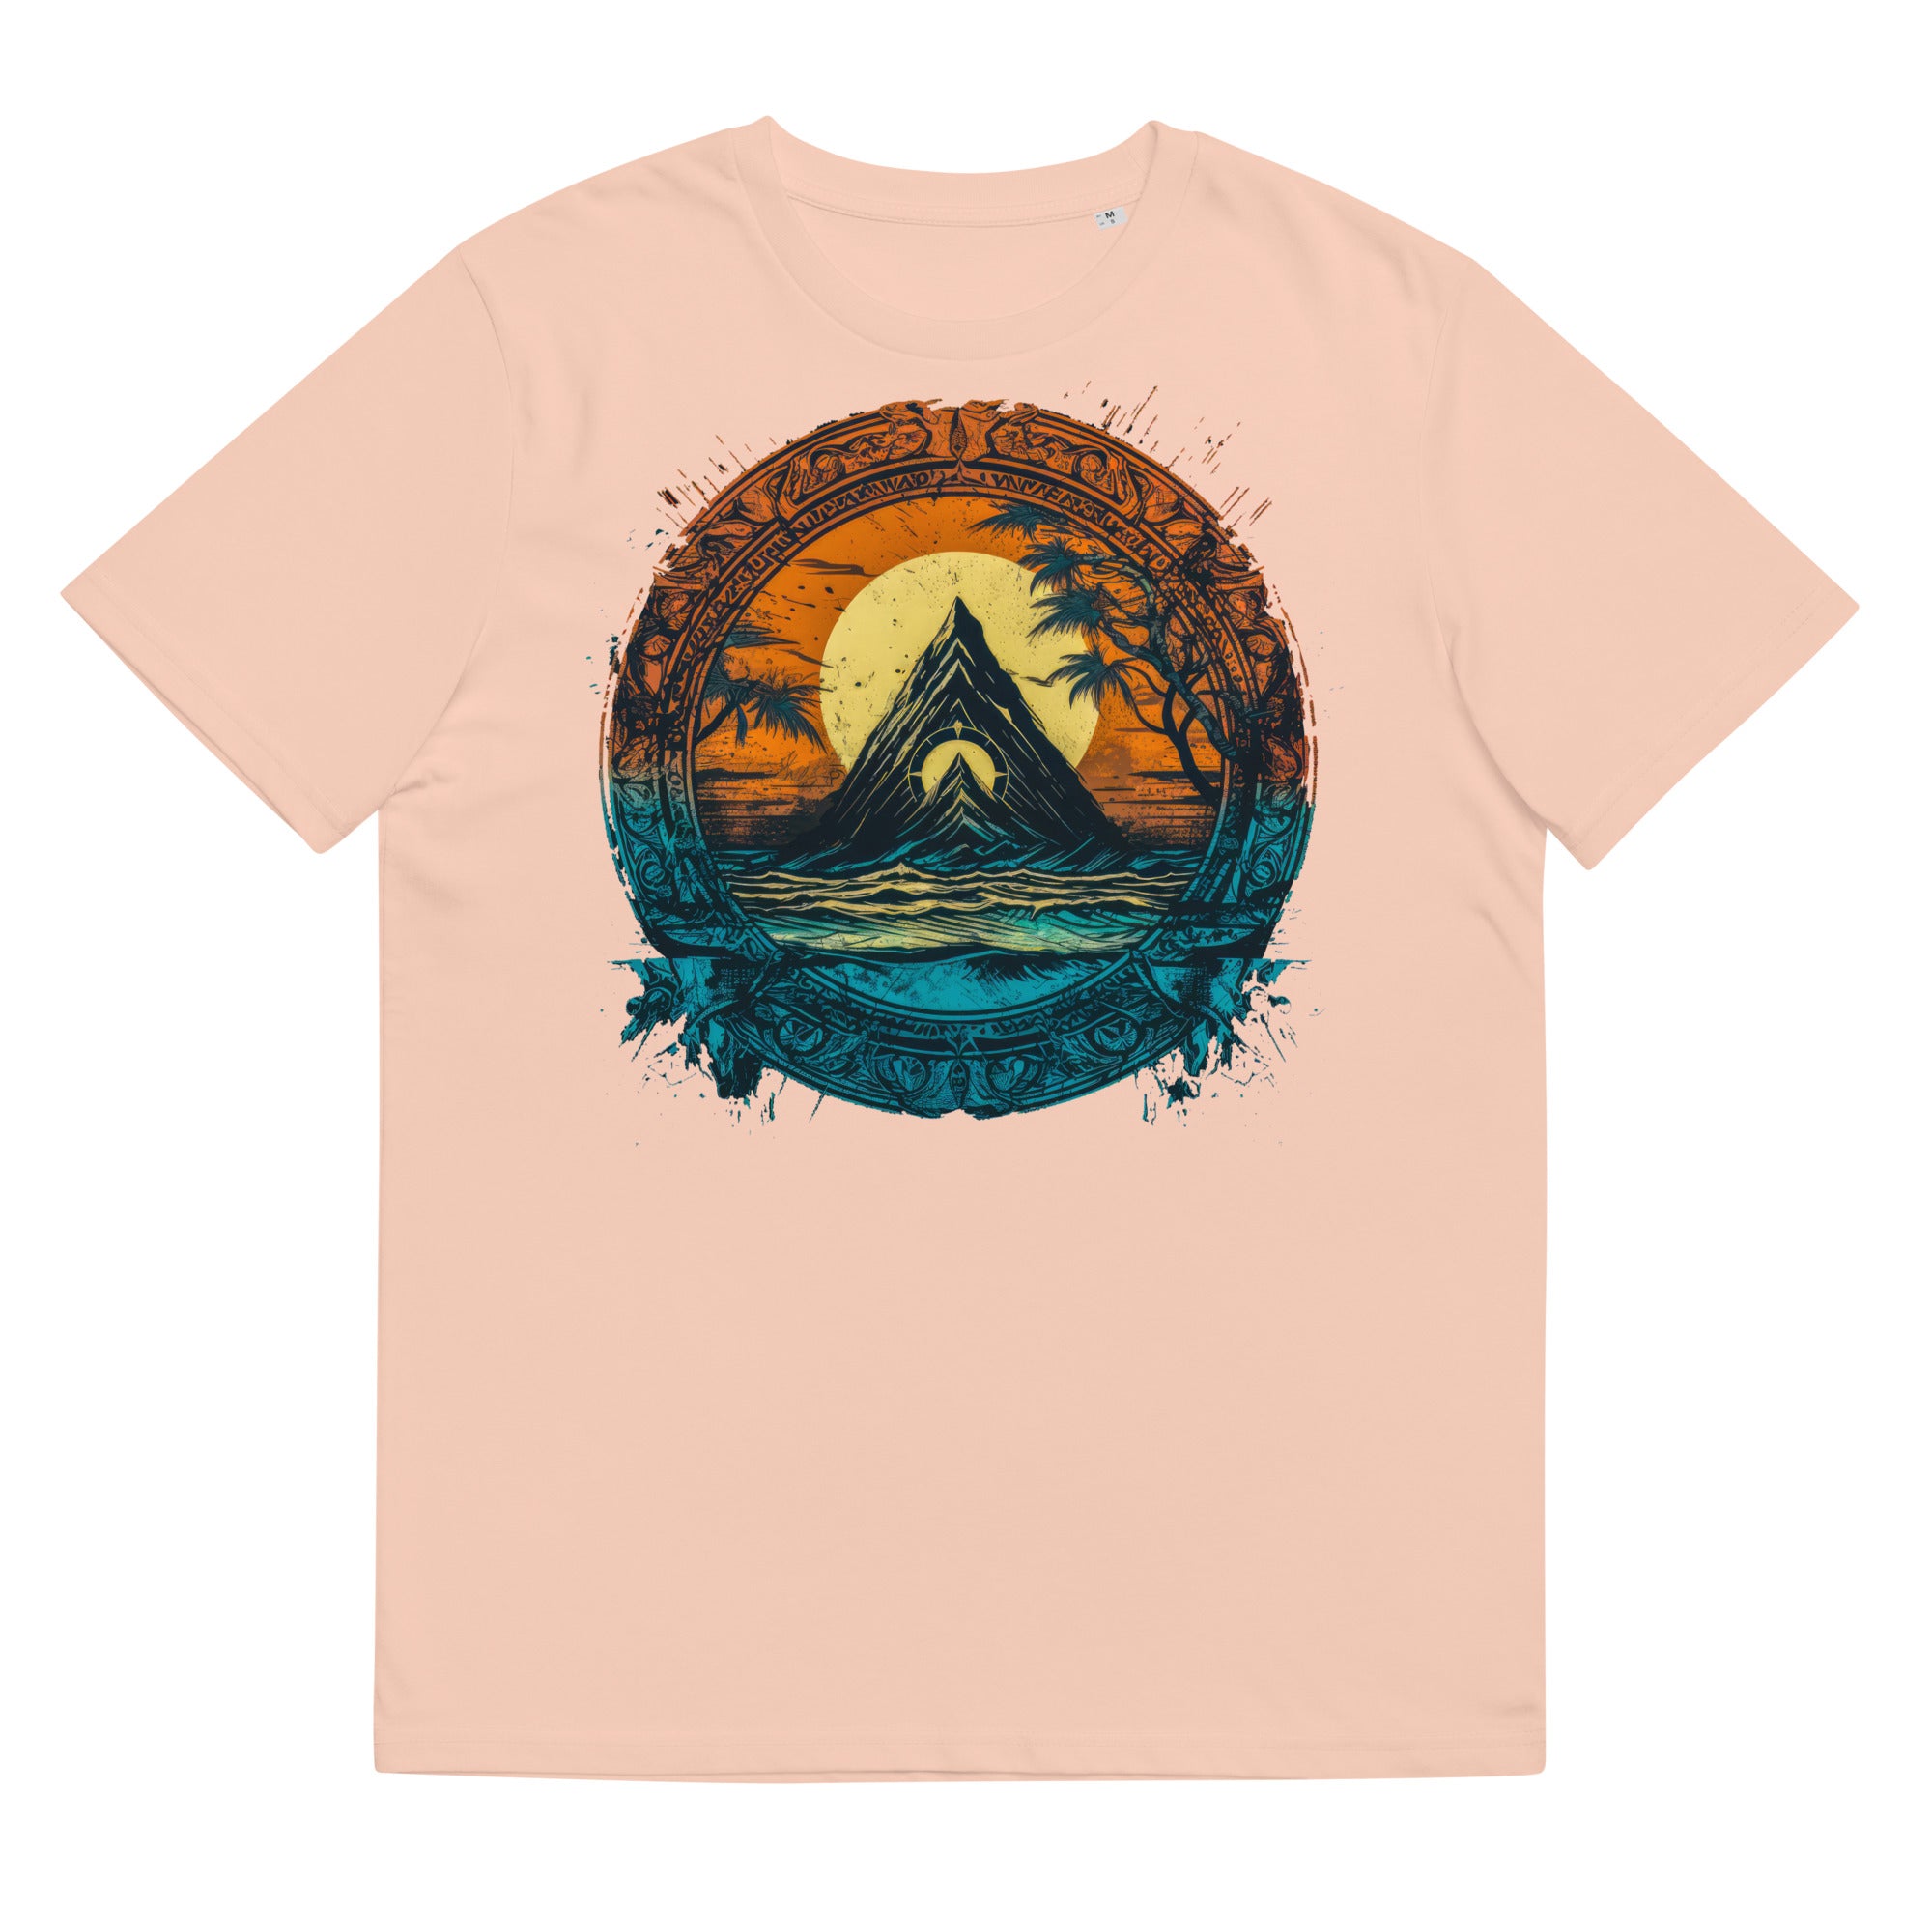 Ocean mountain emblem